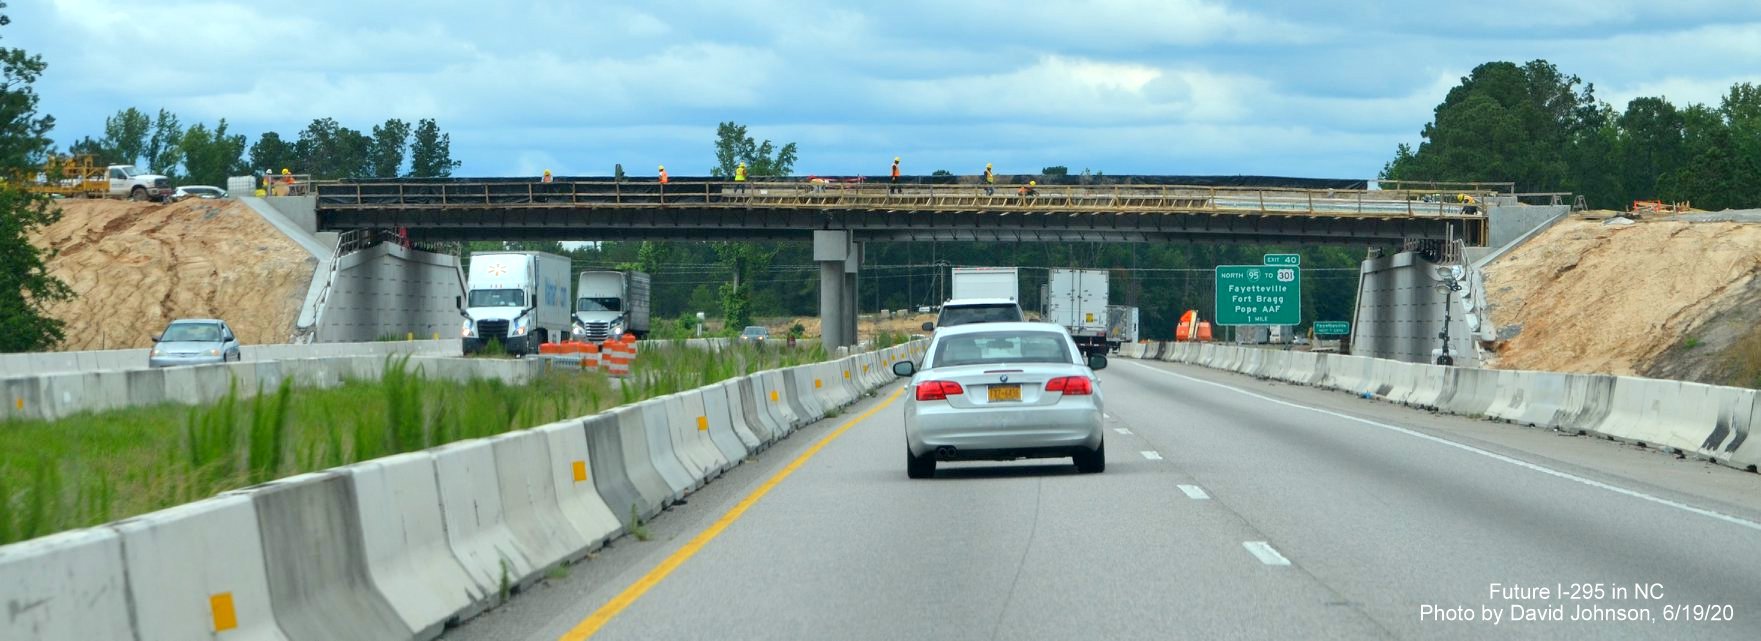 Image of future I-295 exit ramp bridge from I-95 North near Hope Mills, by David Johnson June 2020